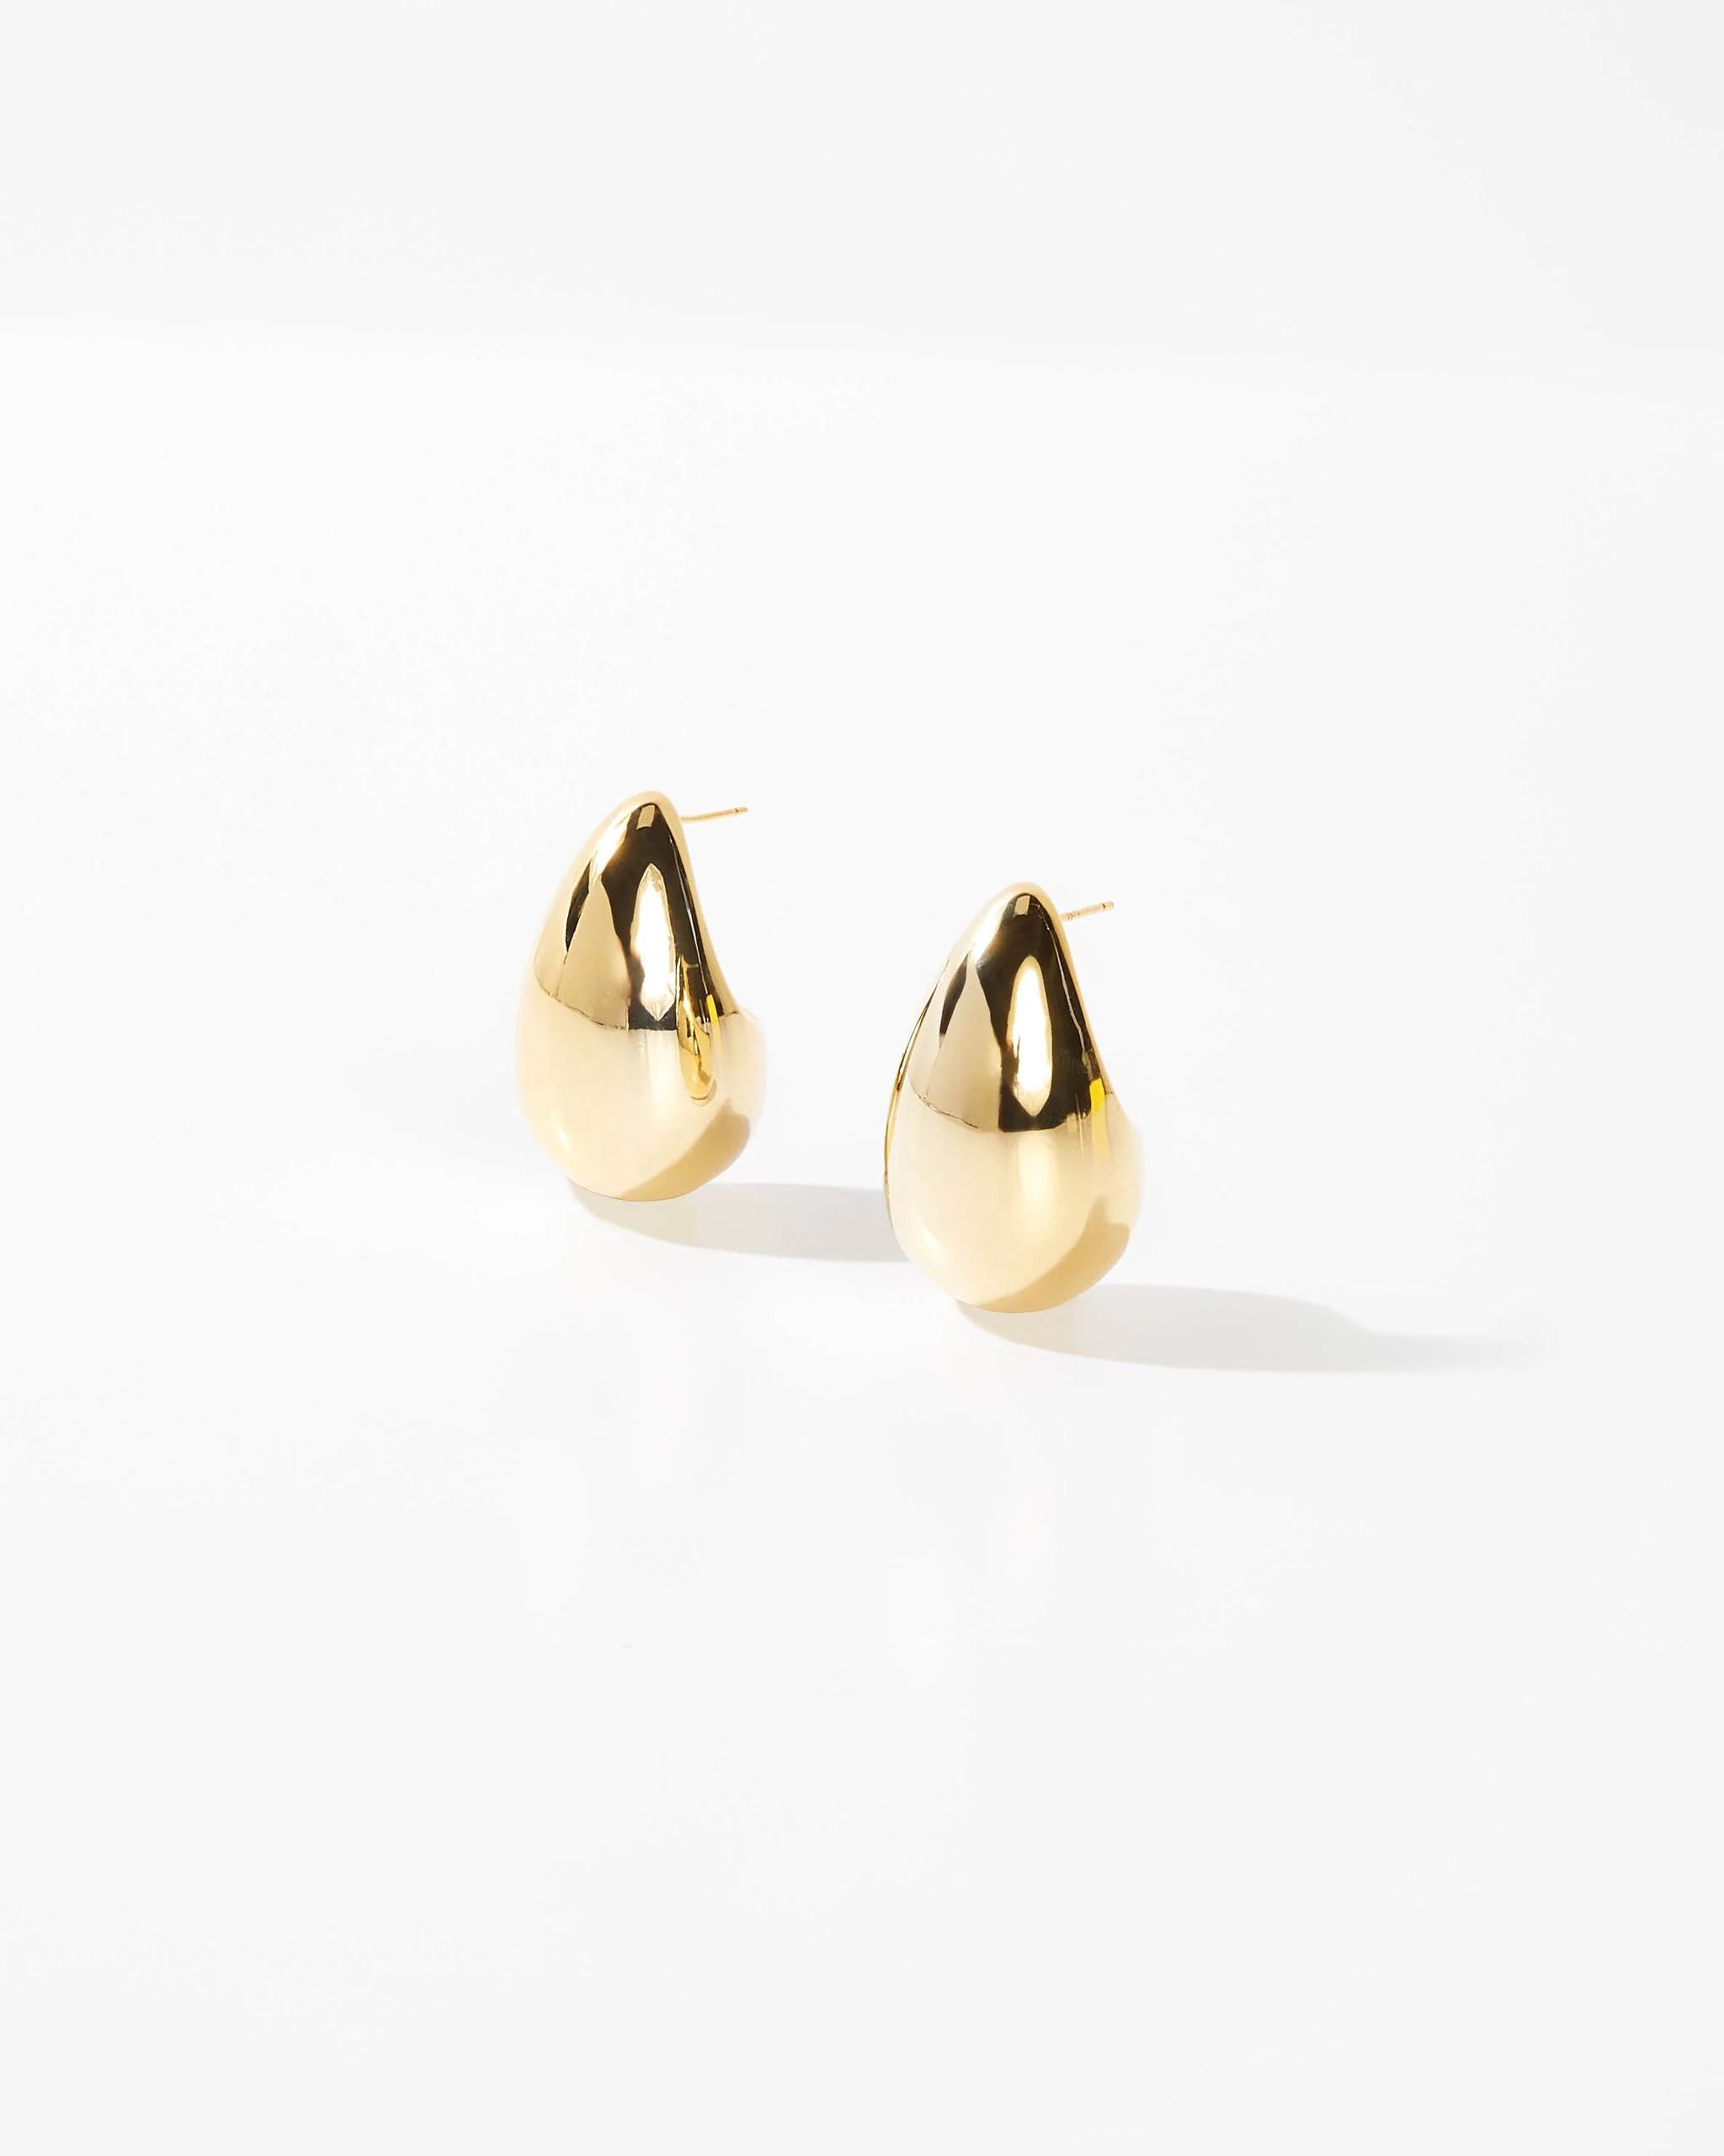 Dannie Teardrop Earrings | VICI Collection